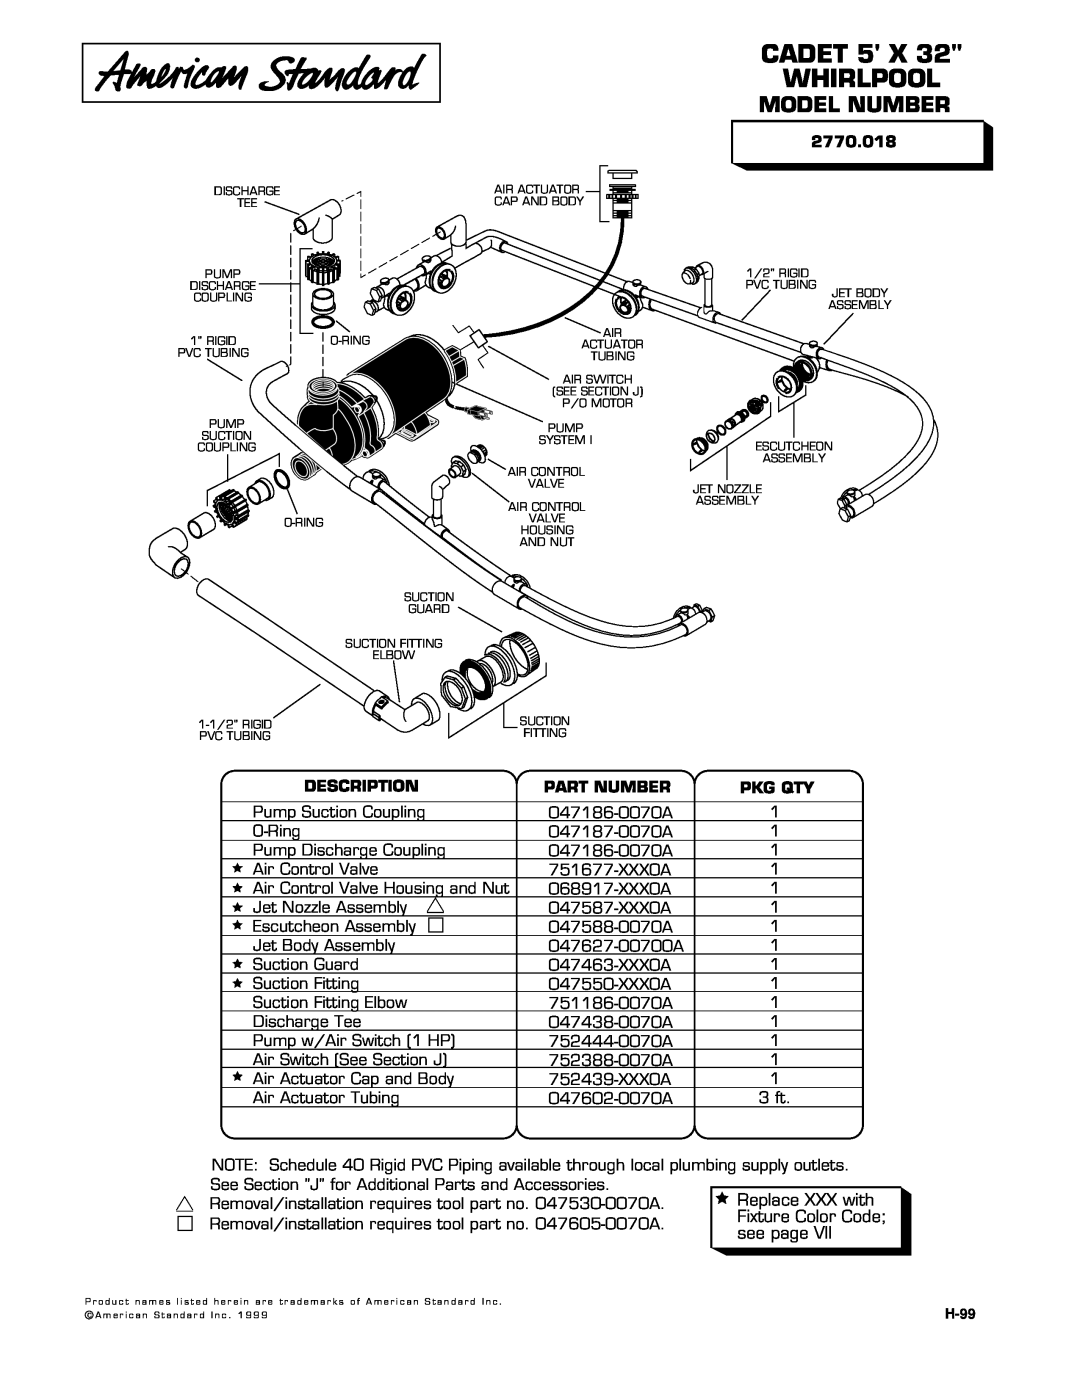 American Standard 2770.018 manual CADET 5 X WHIRLPOOL, Model Number, Description, Part Number, Pkg Qty 